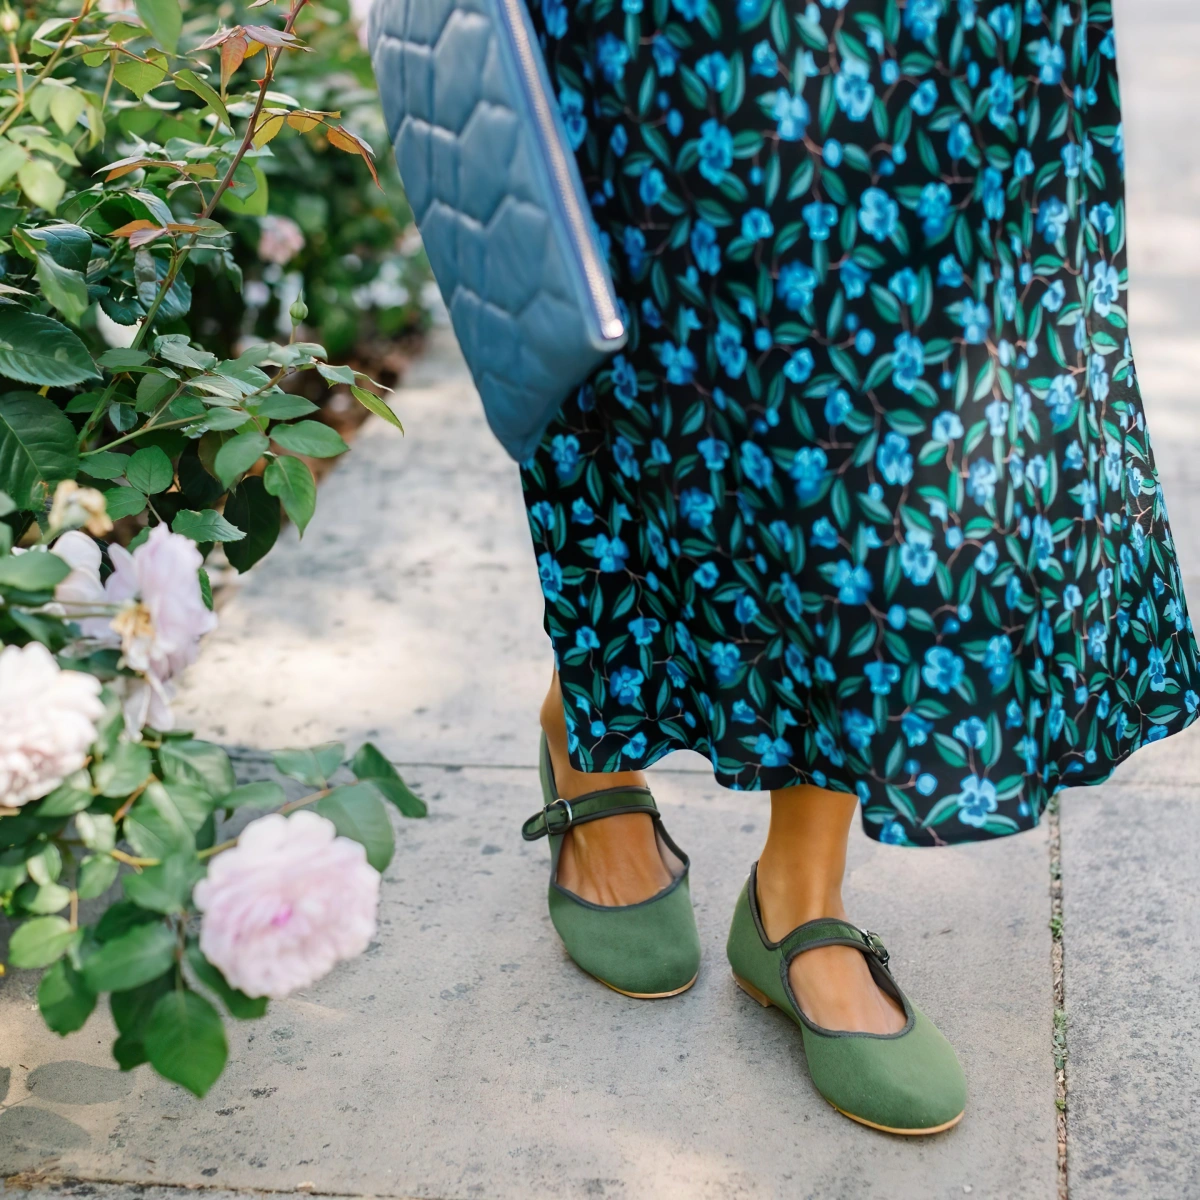 chaussures mary janes velours couleur vert jupe noire motifs fleuris bleu et vert